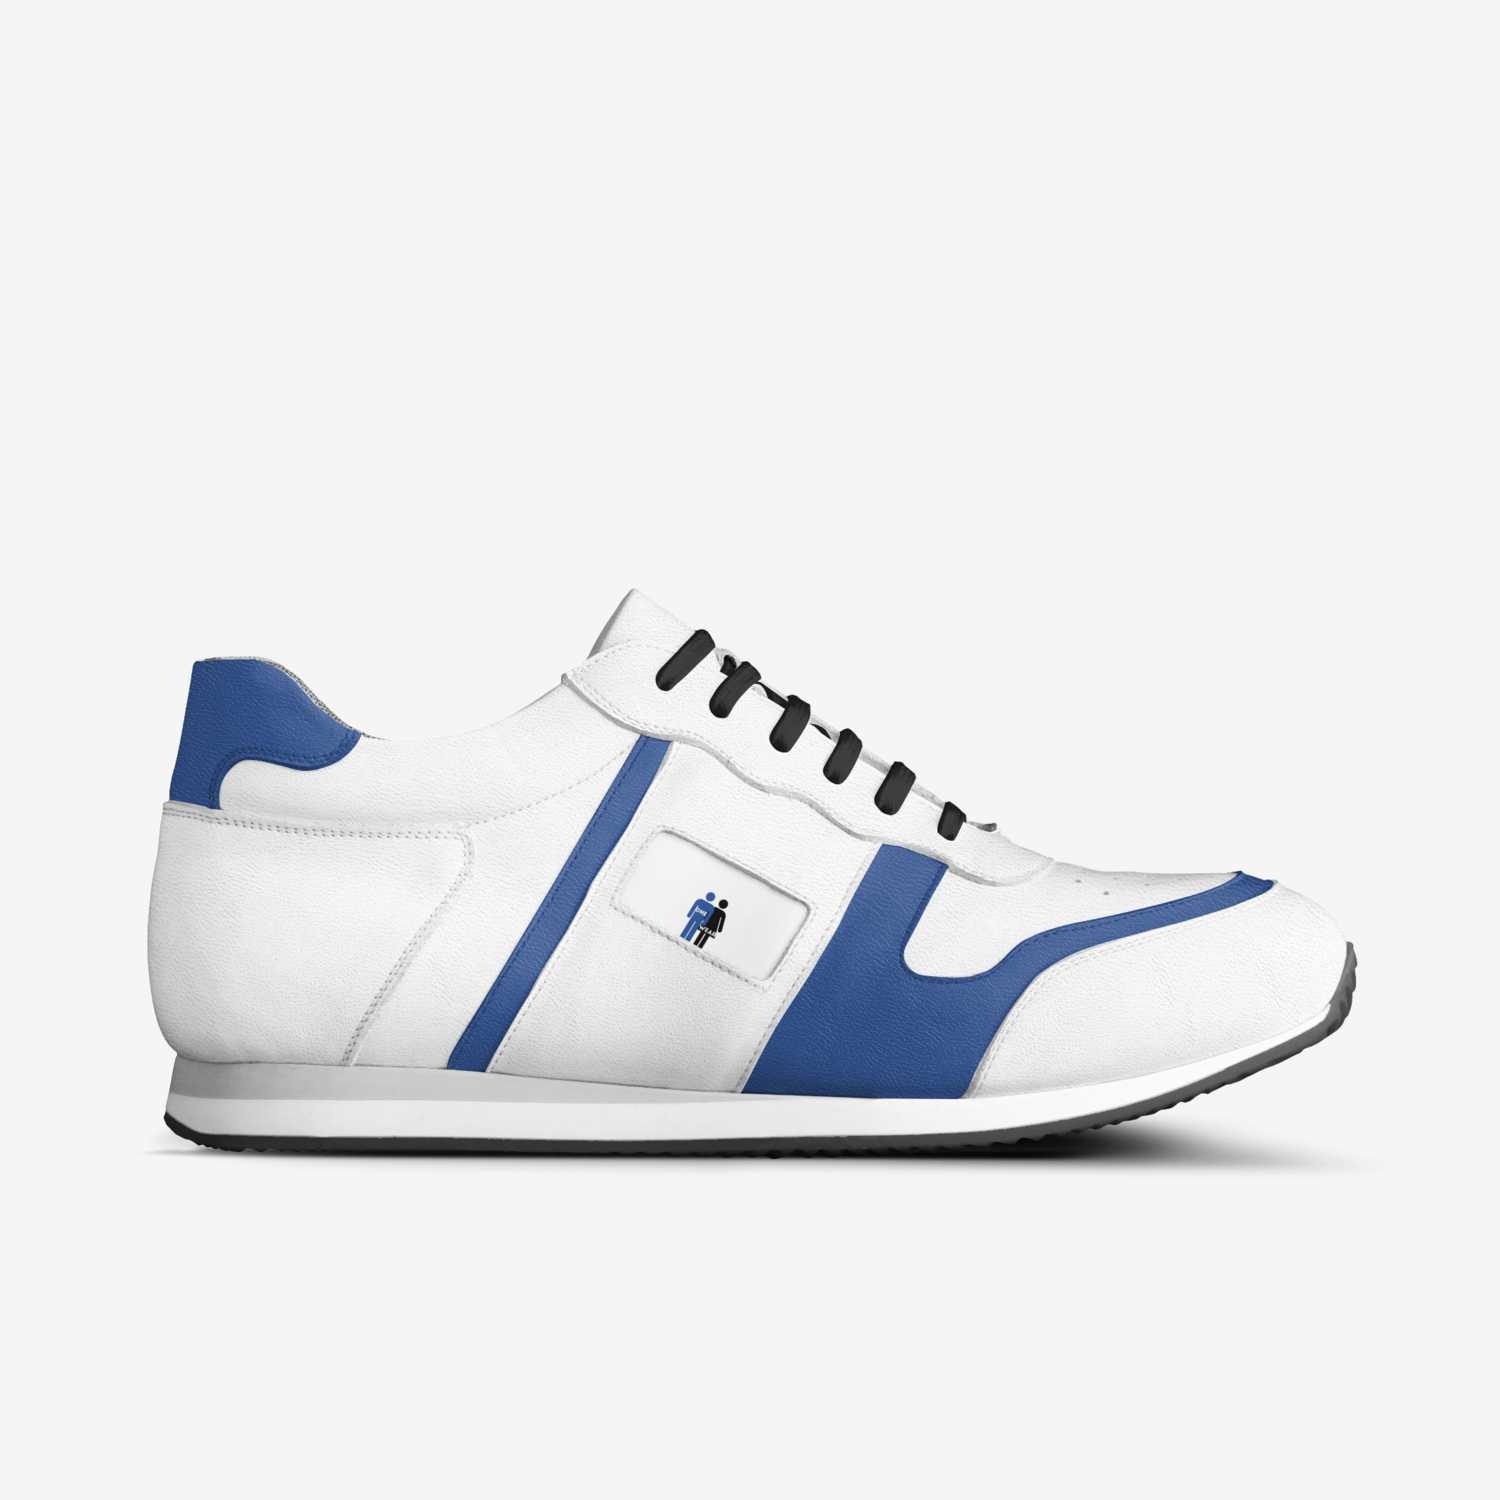 One Wear custom made in Italy shoes by Dan Slattery | Side view